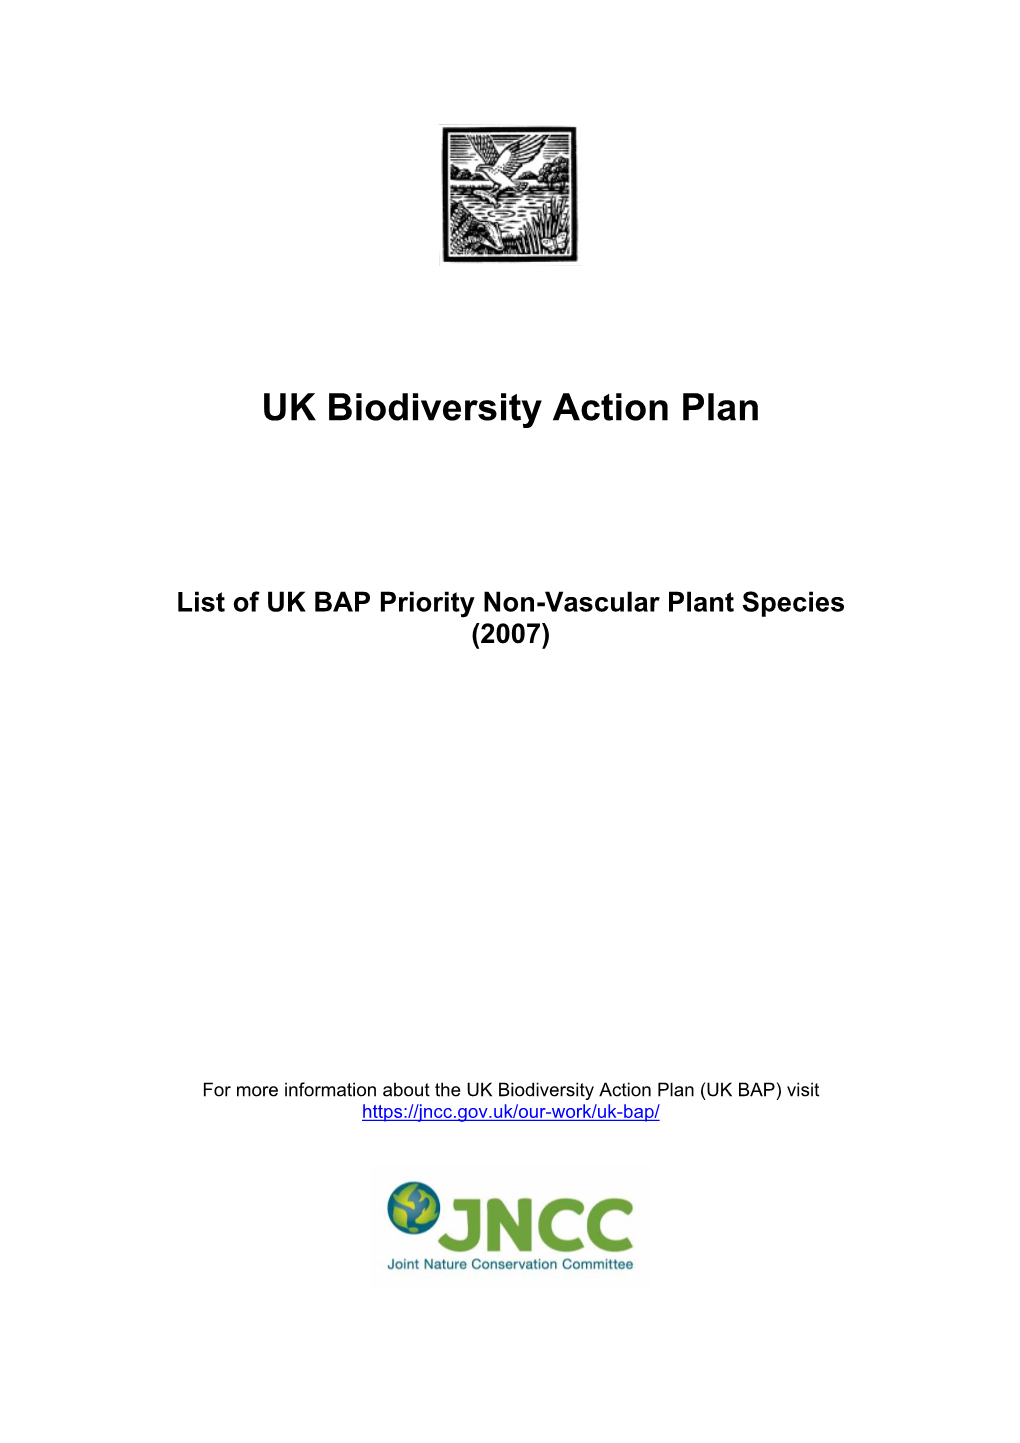 List of UK BAP Priority Non-Vascular Plant Species (2007)